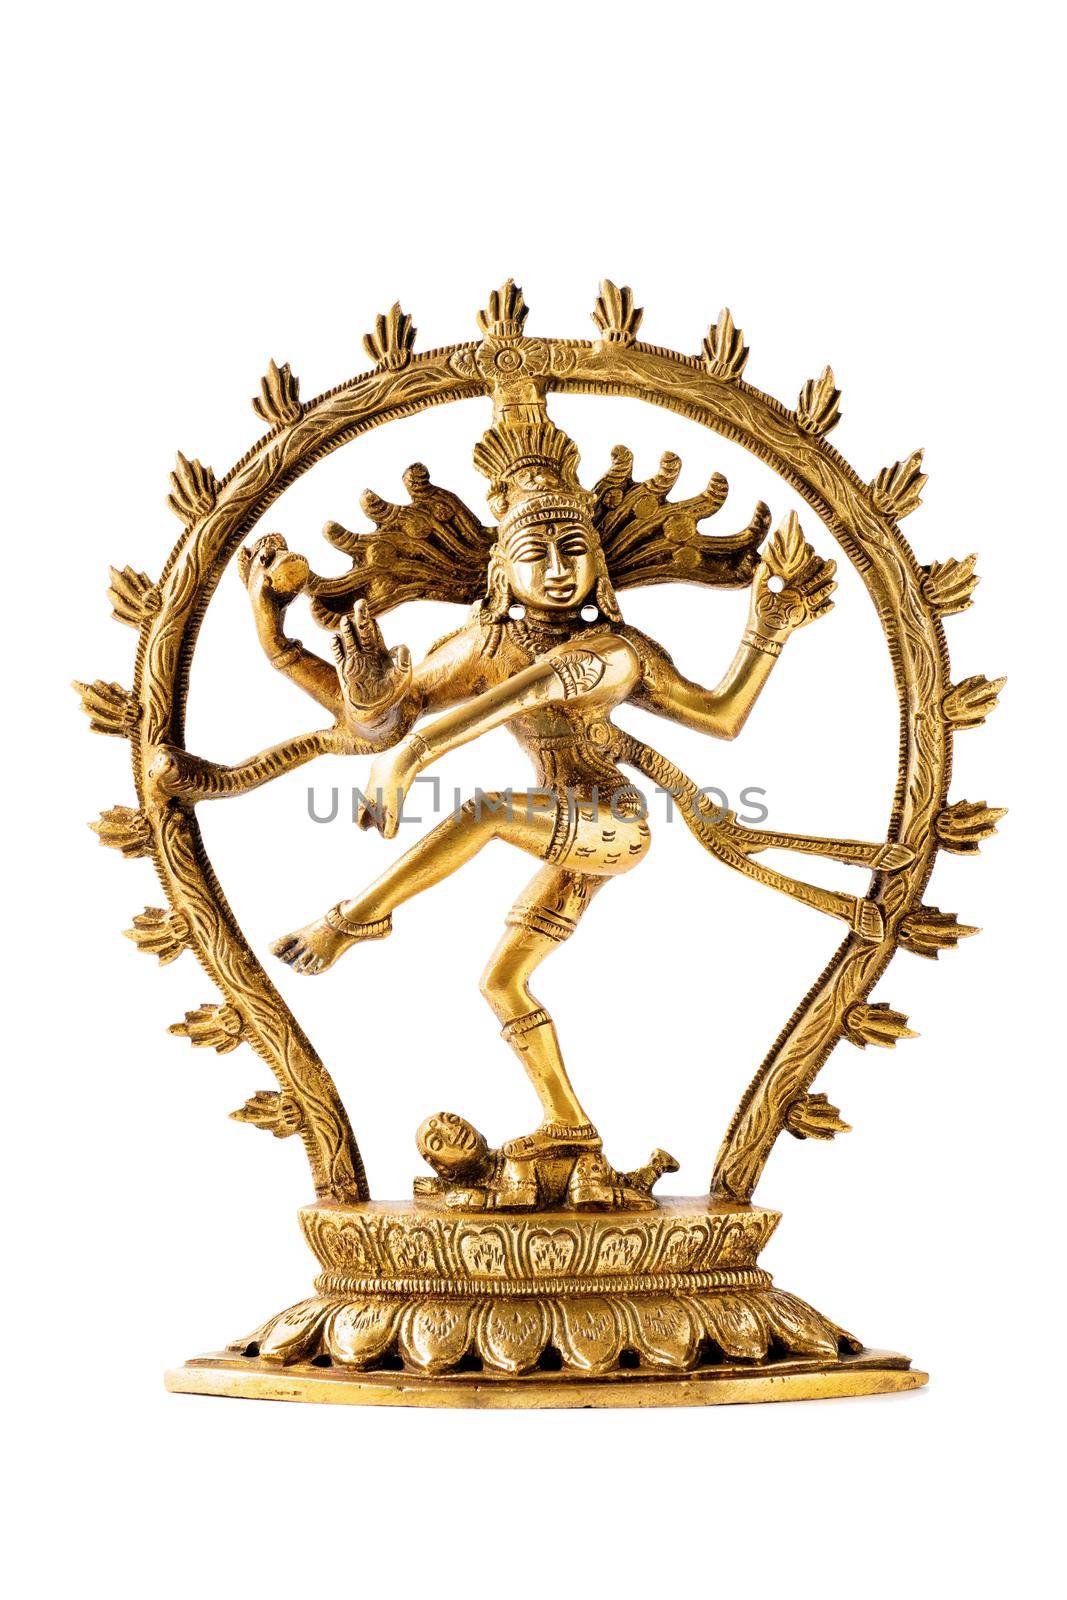 Bronze statue of indian hindu god Shiva Nataraja - Lord of Dance isolated on white